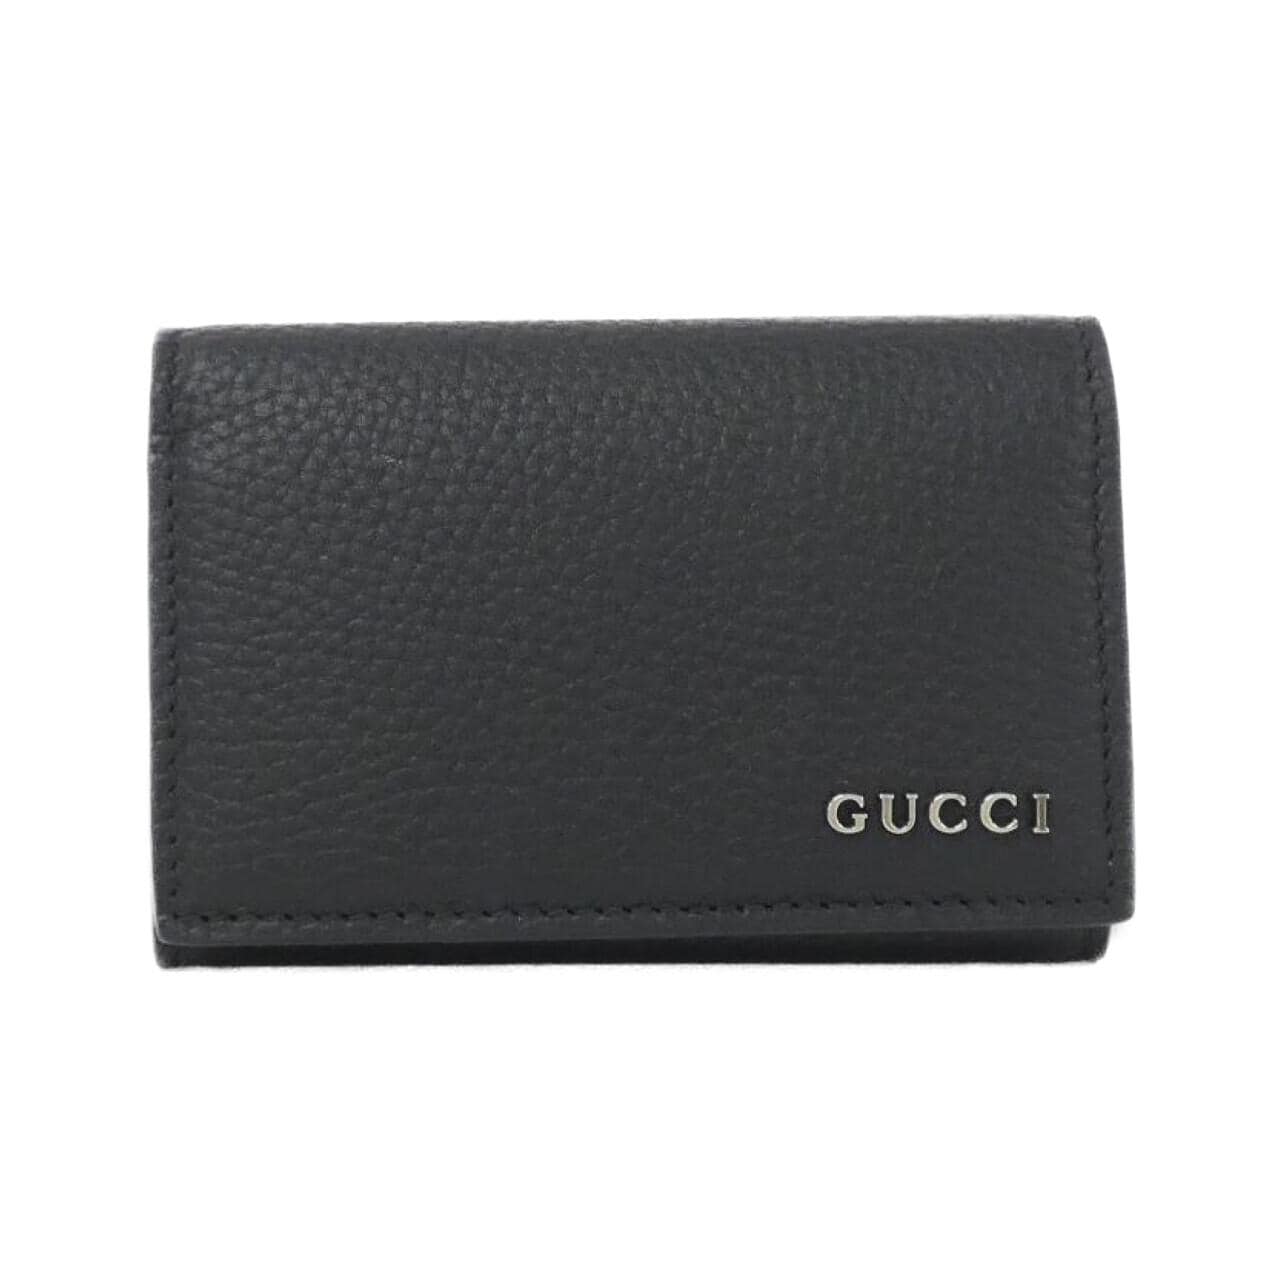 Gucci 771152 AABXM Card Case